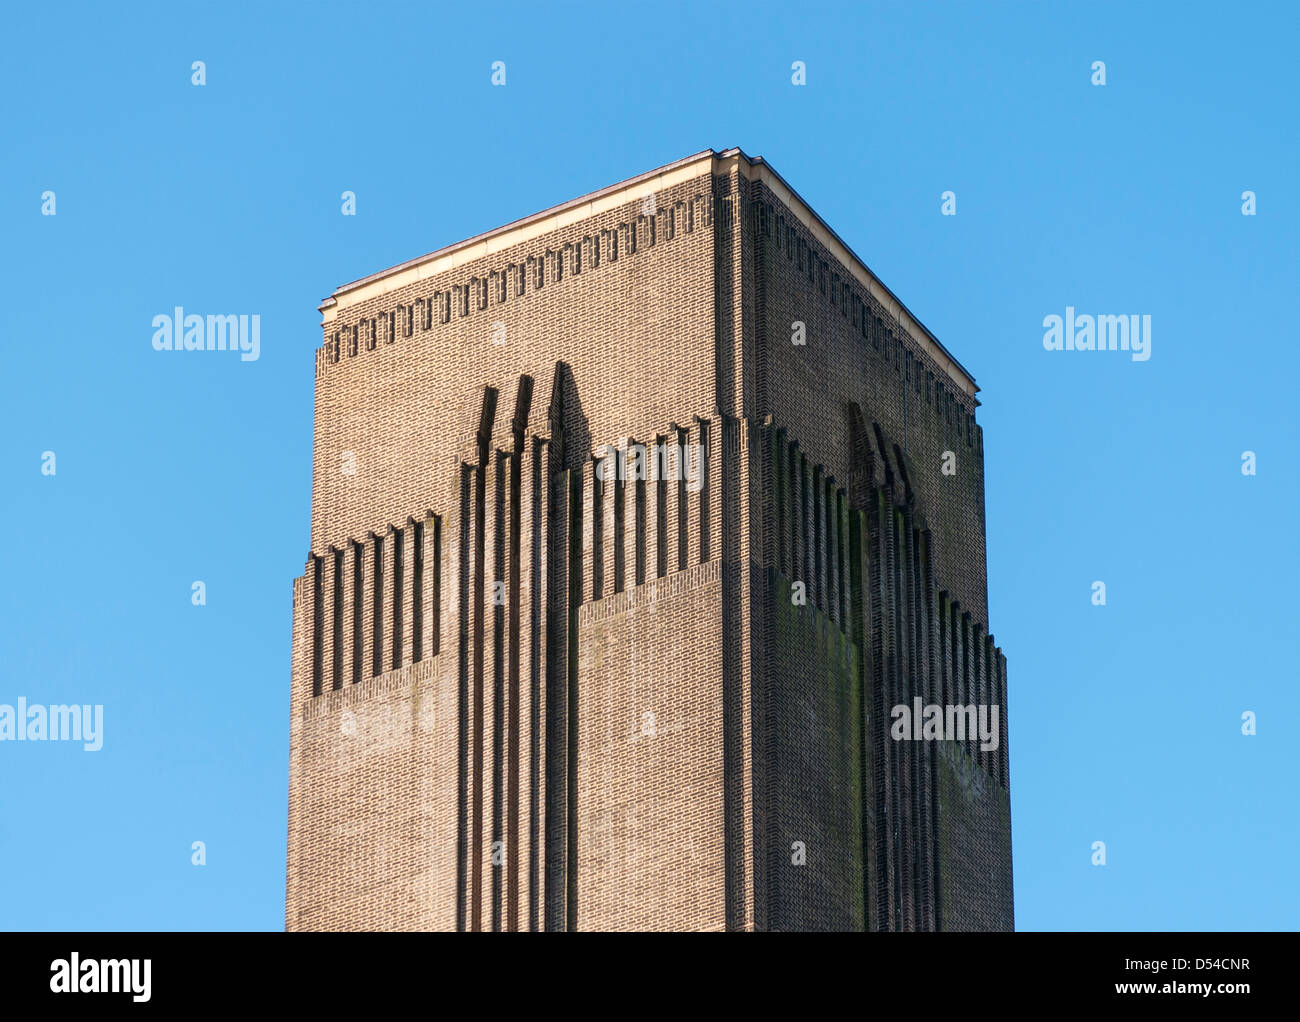 Close-up of Chimney of Tate Modern, former Bankside Power Station Building, London, England, UK Stock Photo